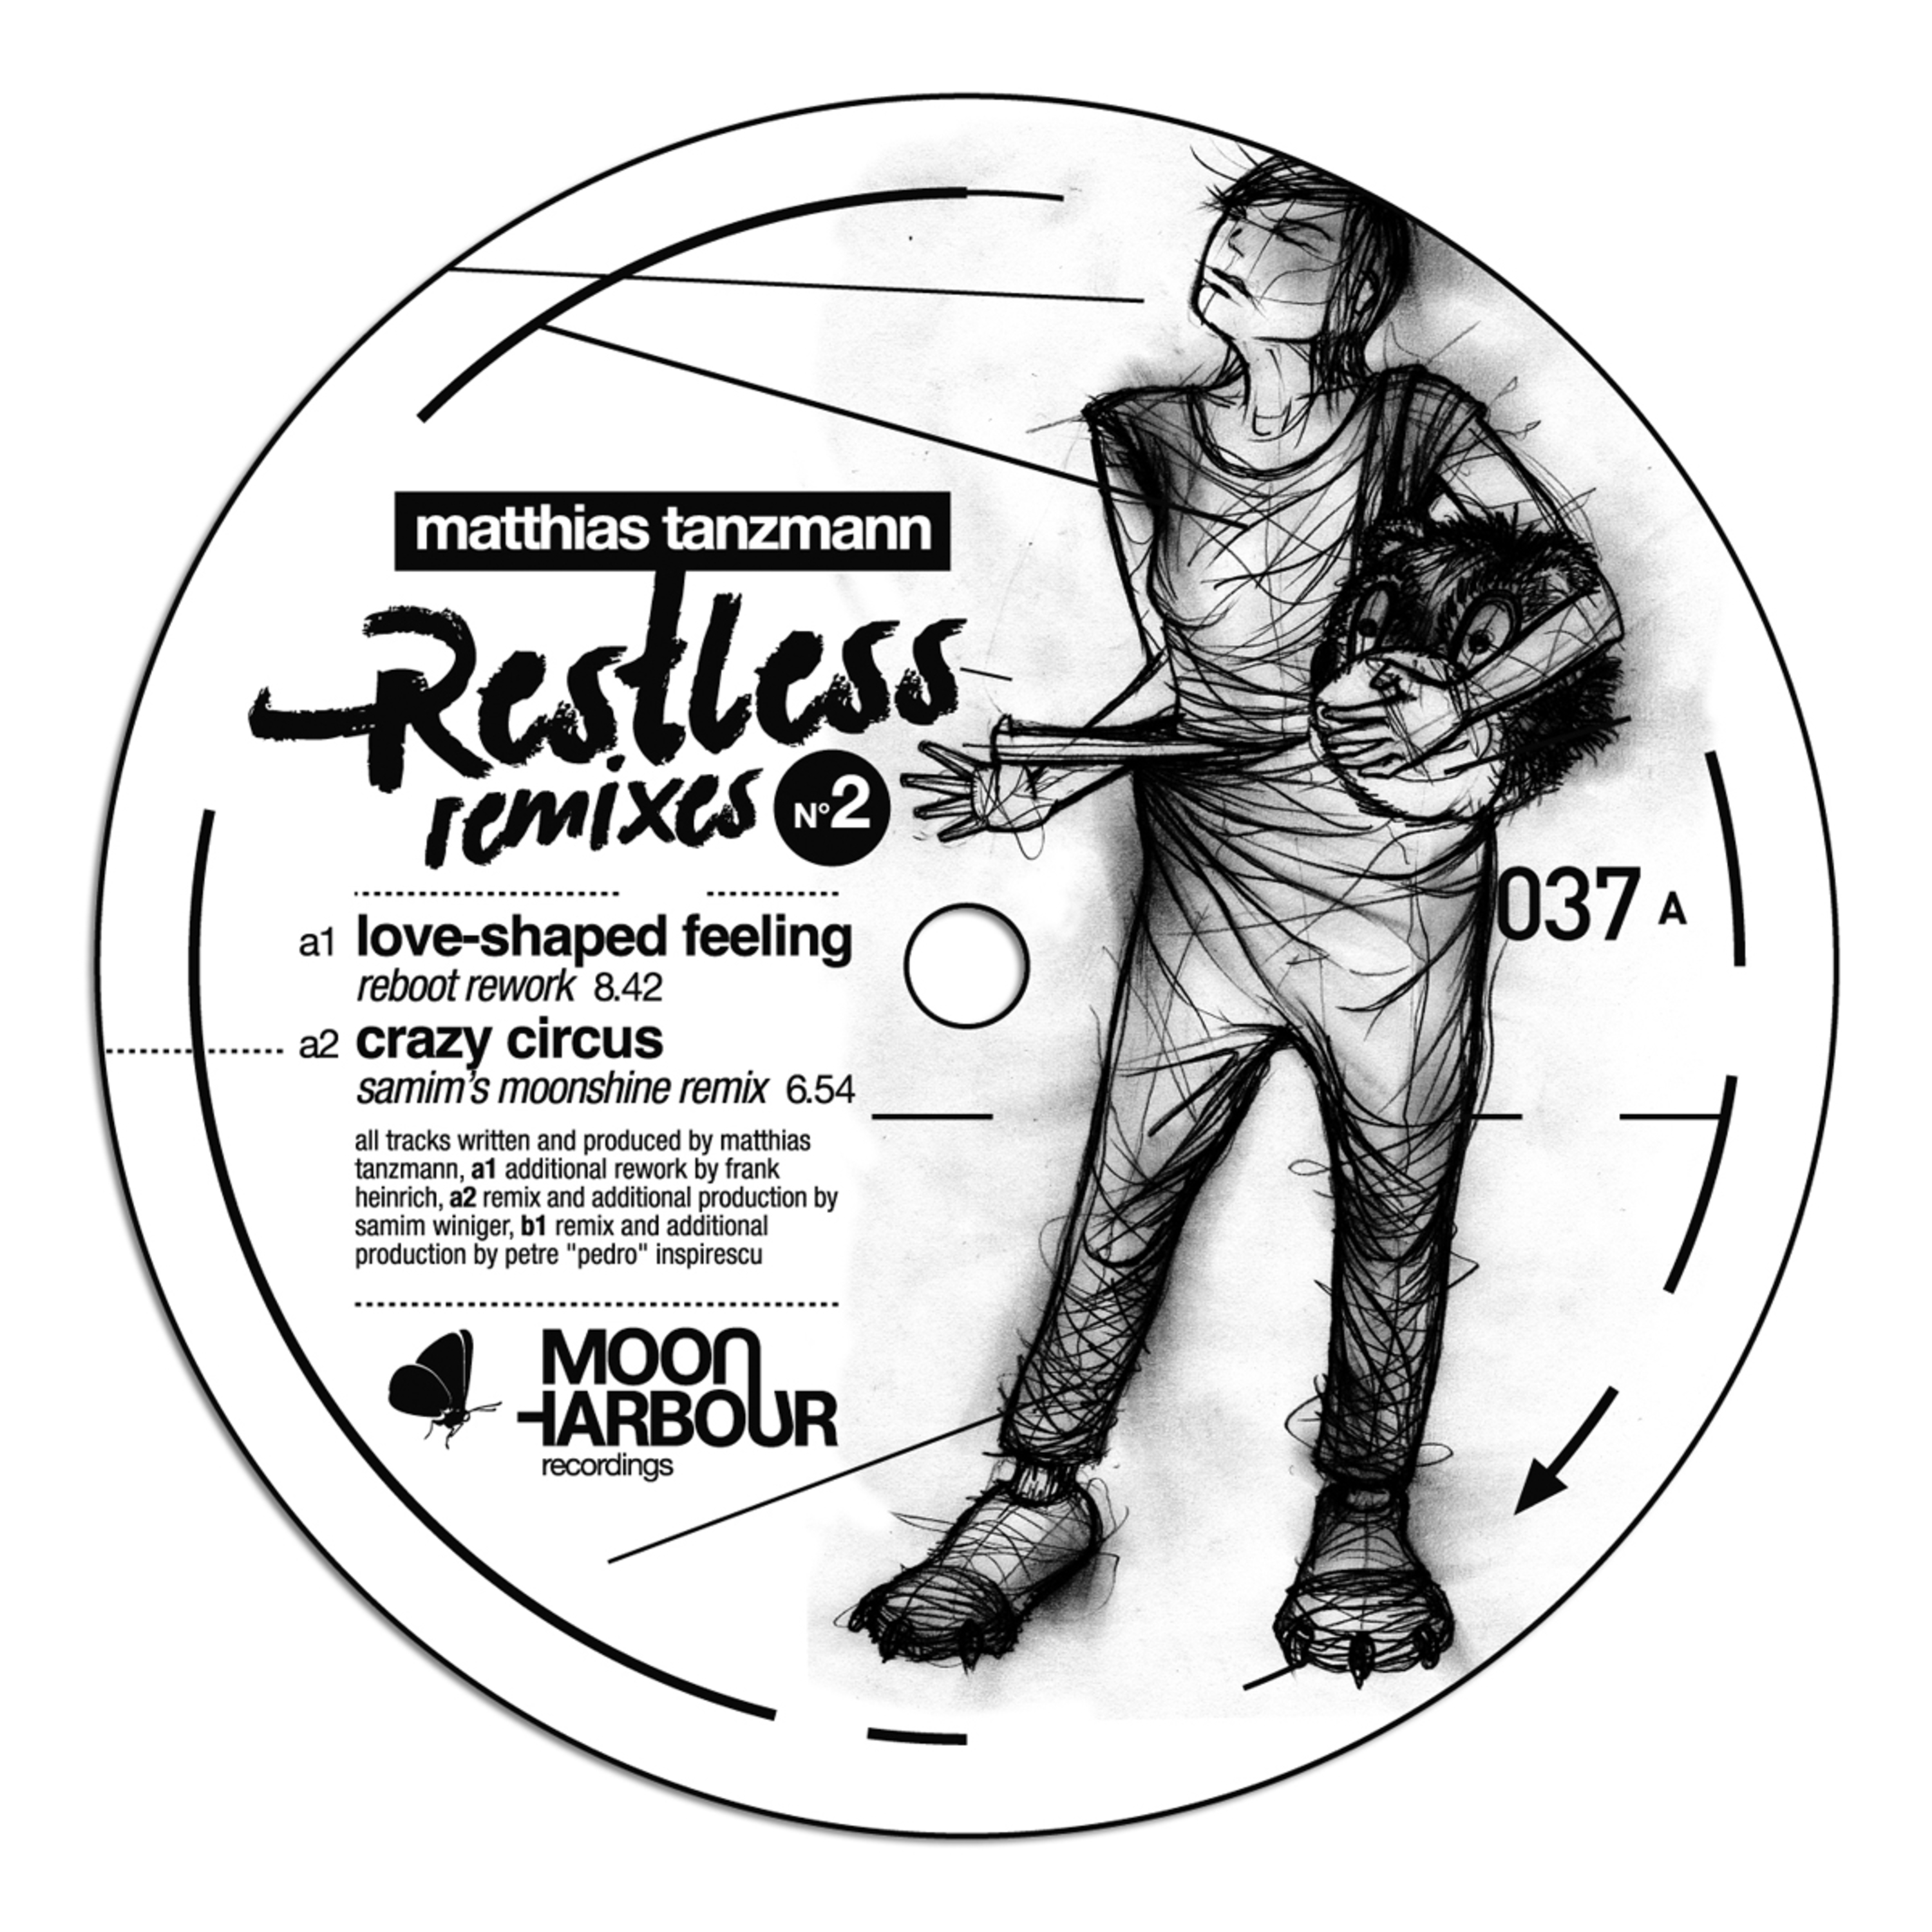 Restless Remixes Part 2